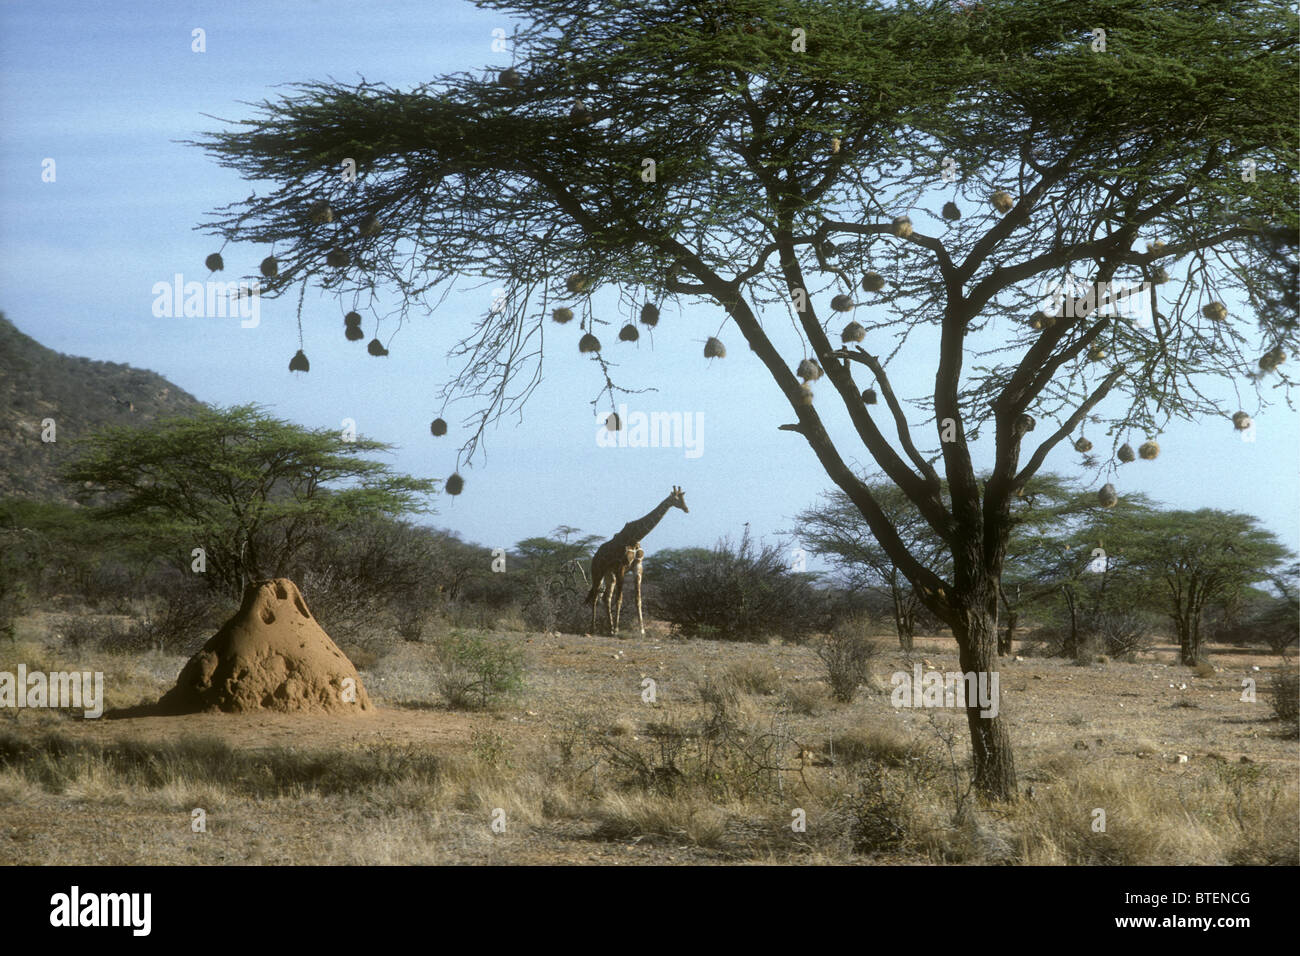 Acacia Tortilis tree Black Capped Weaver birds nests Reticulated Giraffe and termite mound Samburu National Reserve Kenya Africa Stock Photo